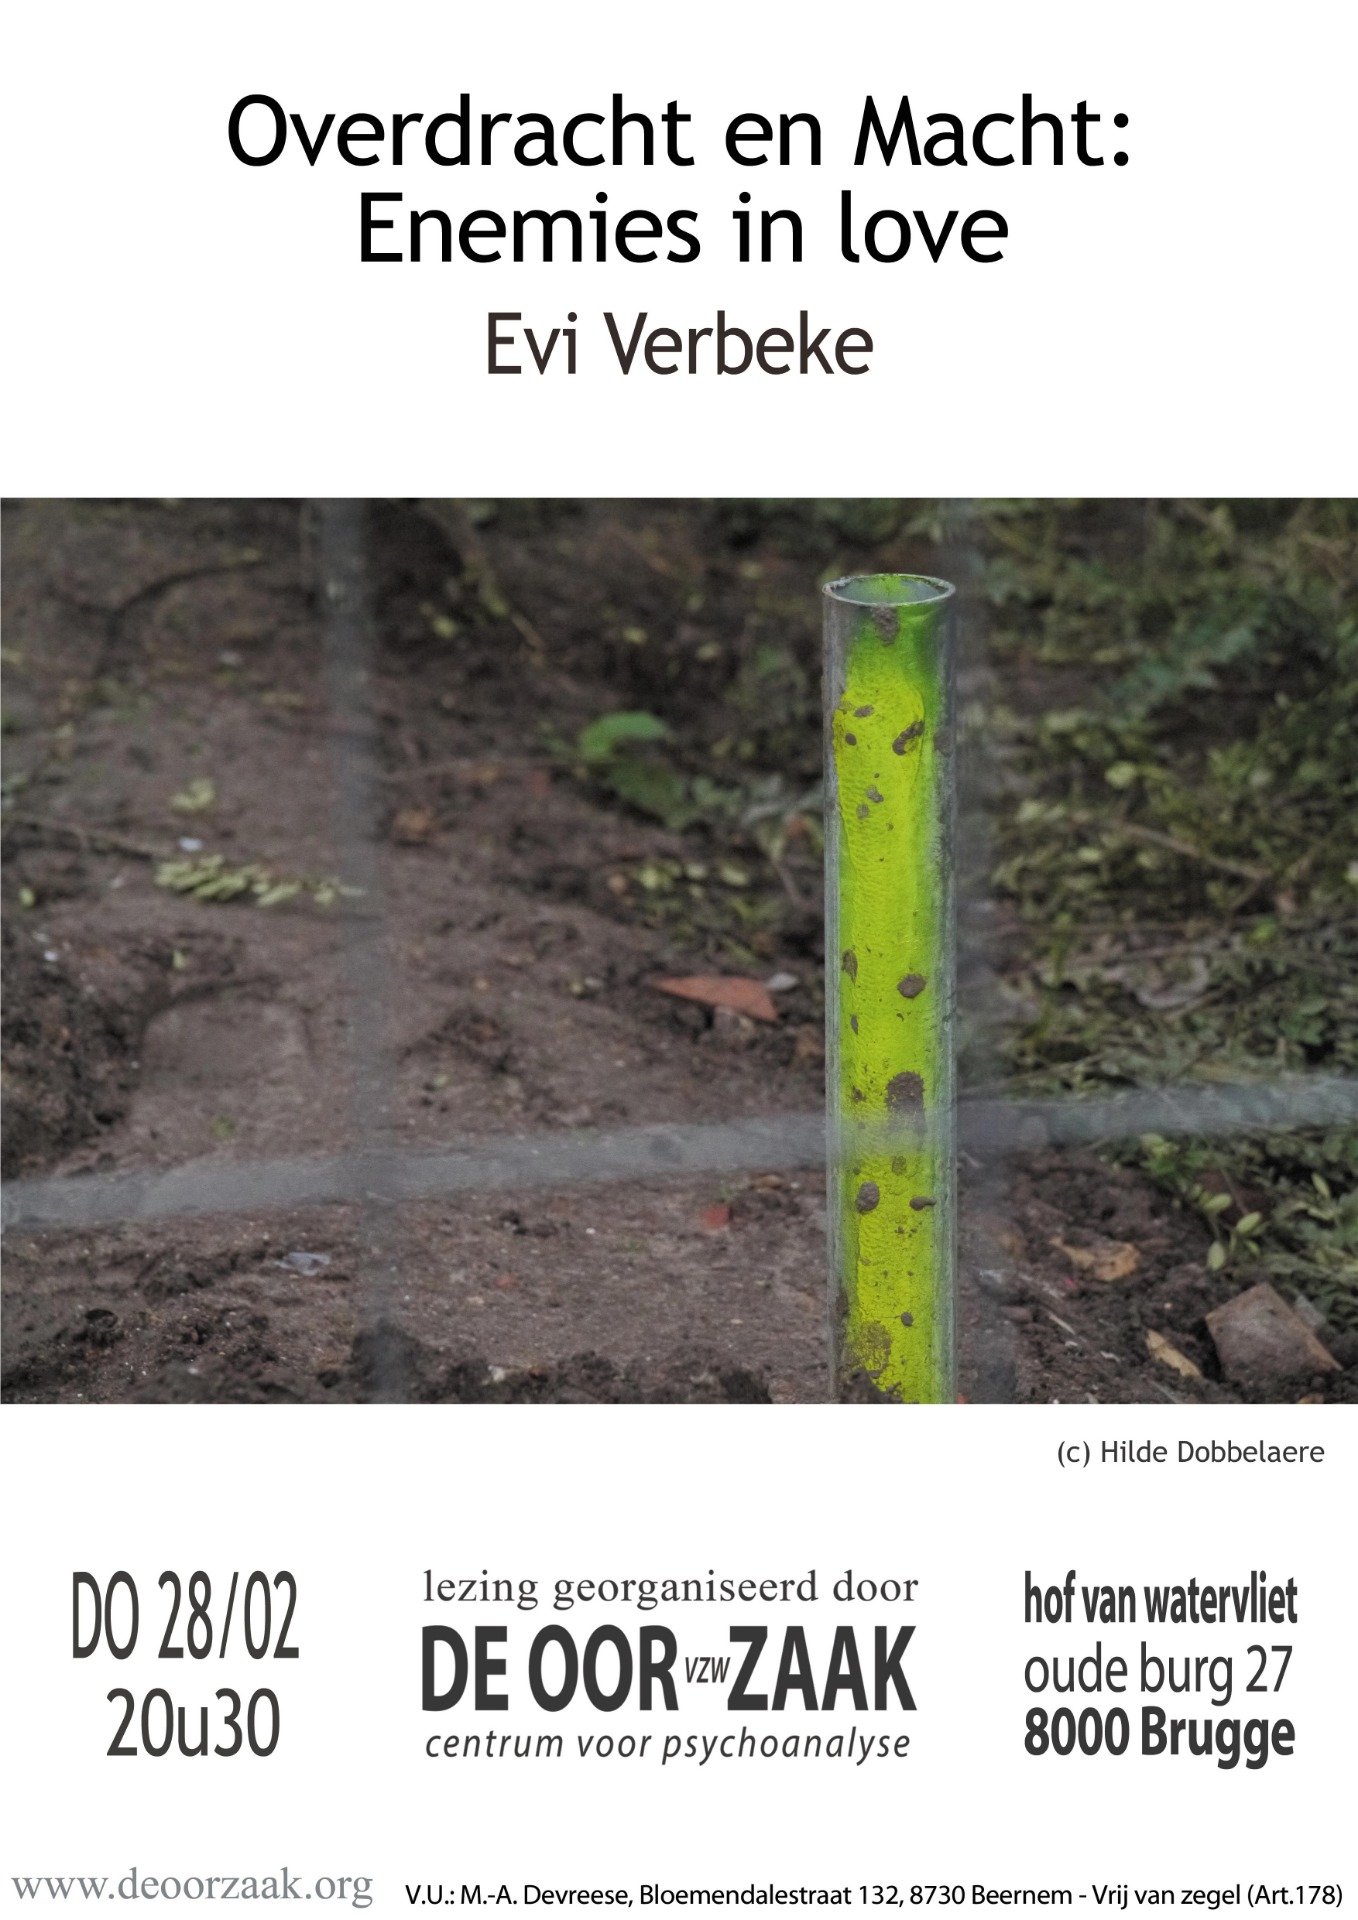 Overdracht & Macht: Enemies in love  Evi Verbeke